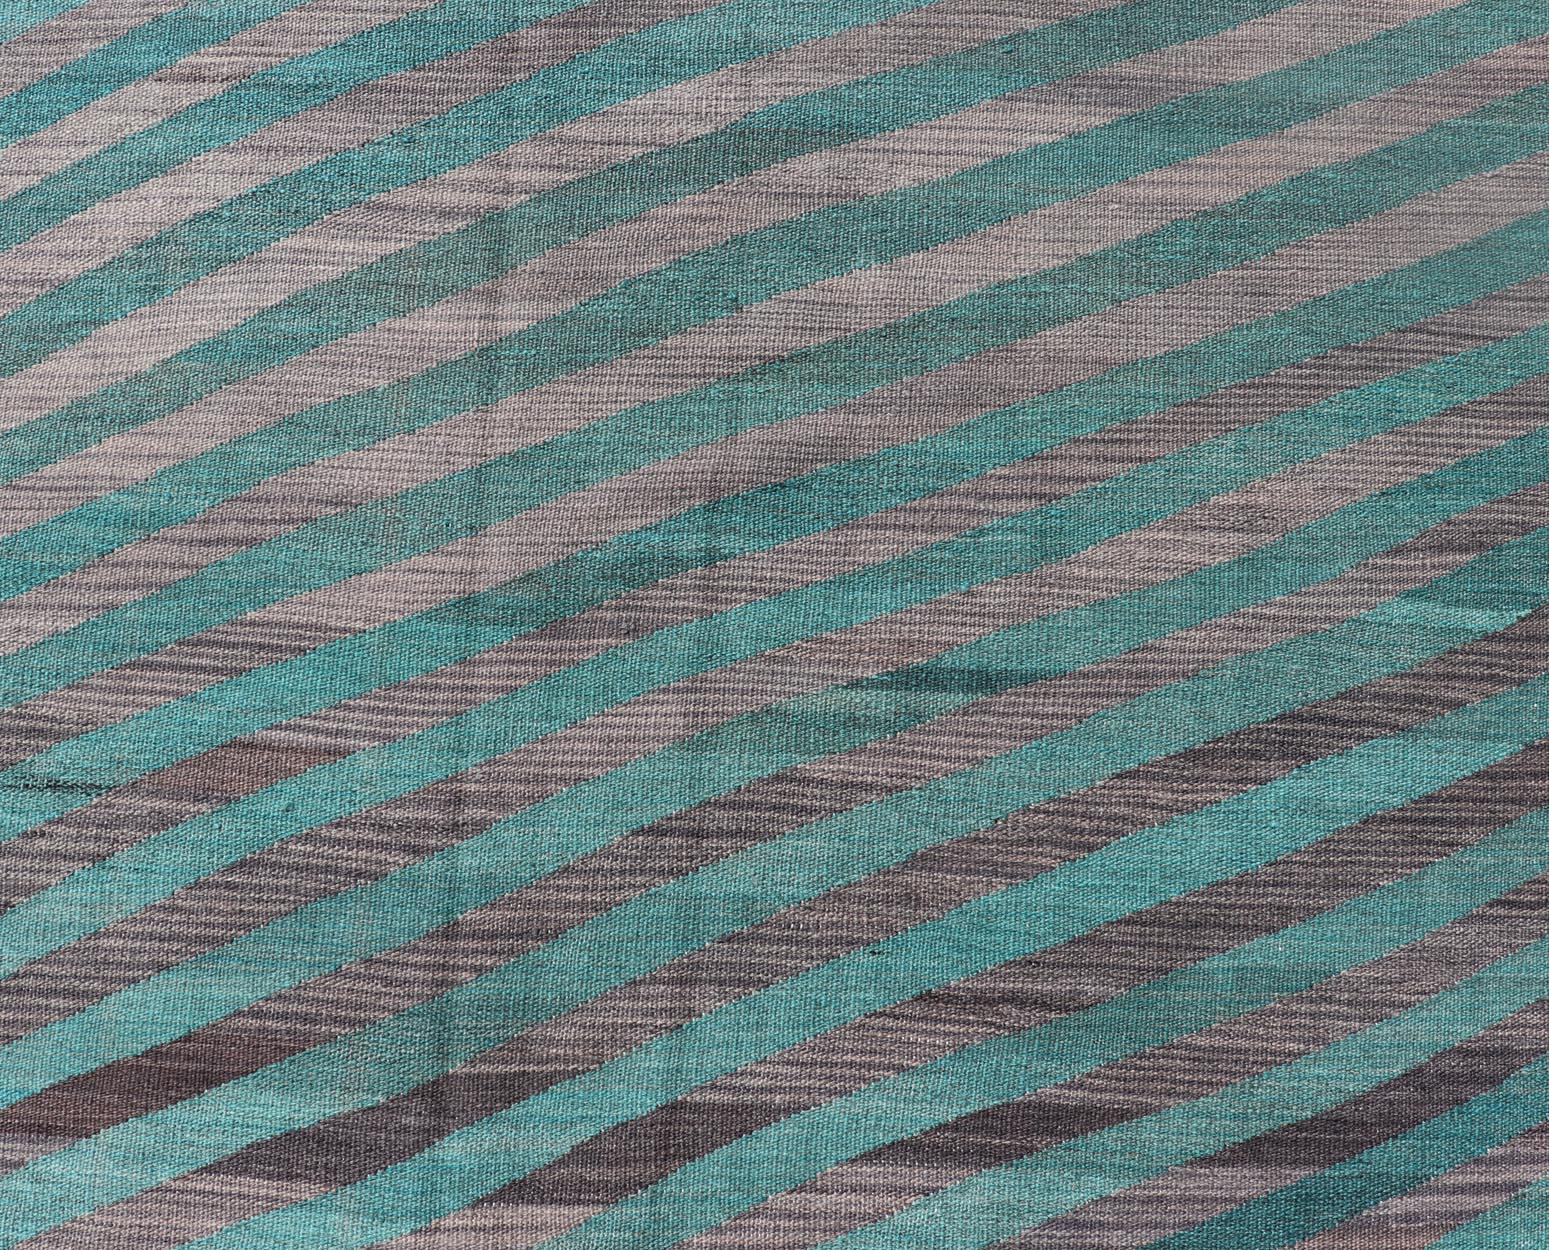 Modern Afghan Hand-Woven Kilim in Wool with Sub-Geometric Slanted Stripe Design For Sale 5